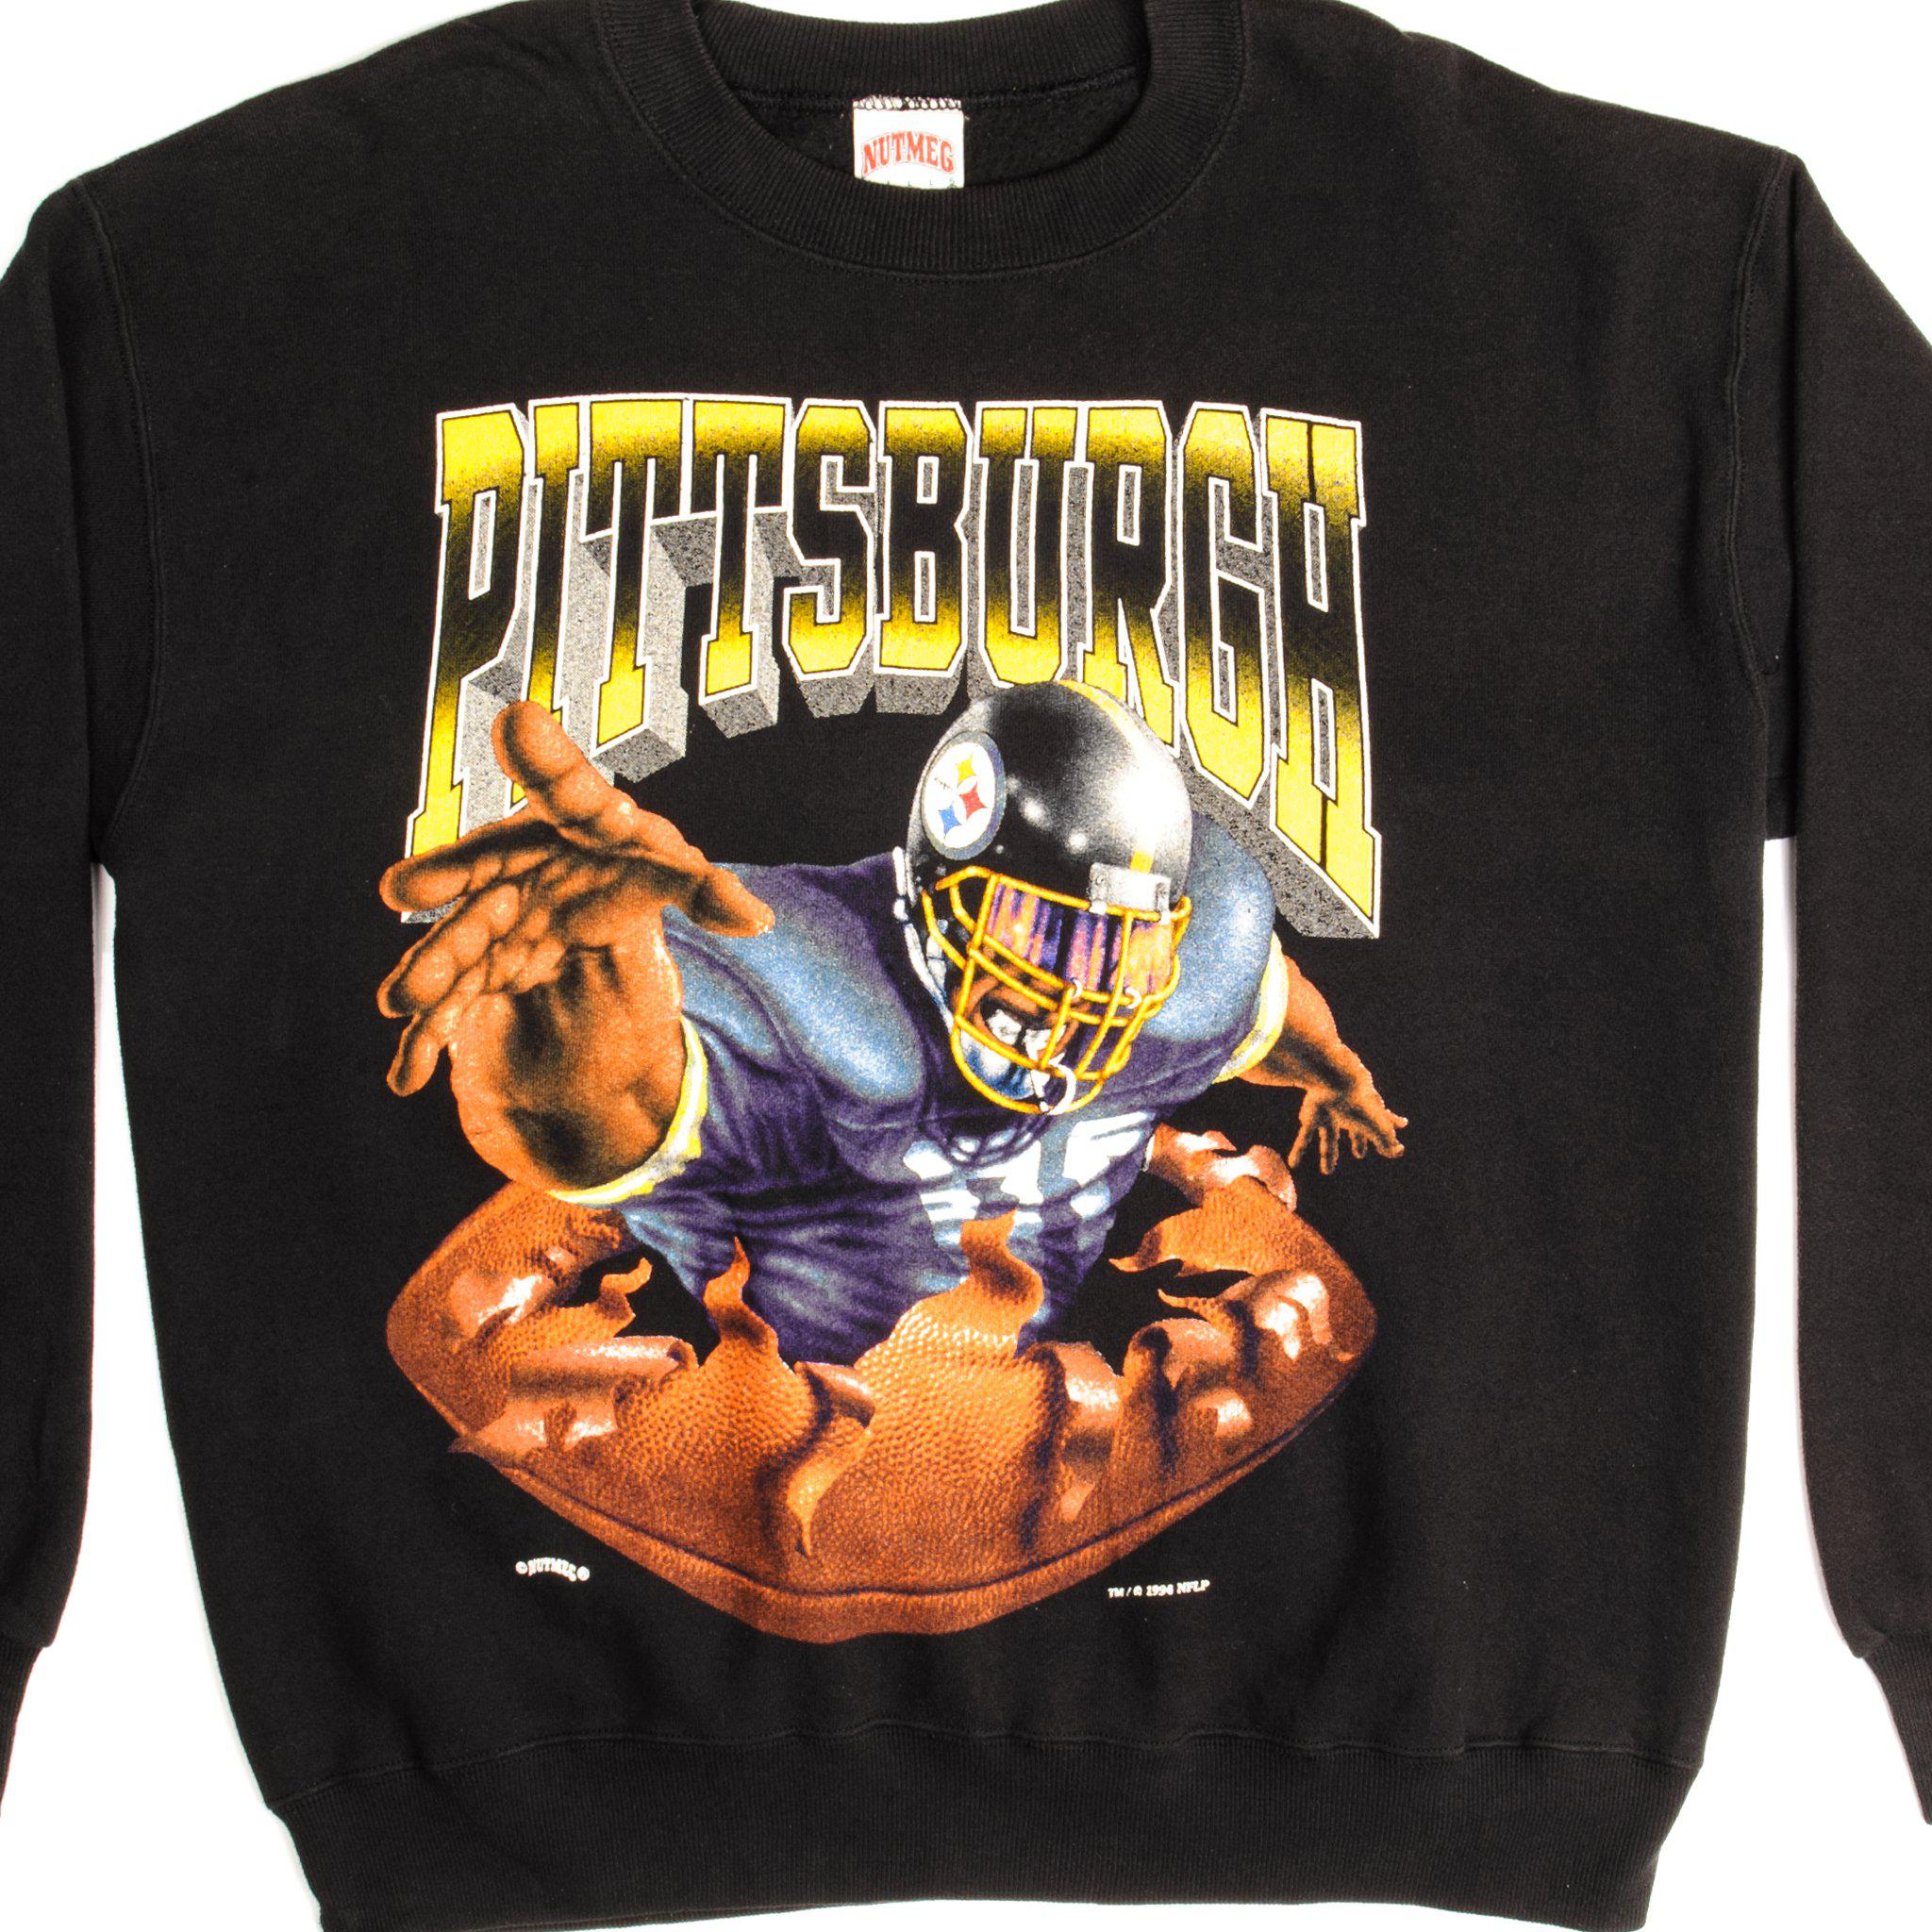 Vintage 90s Pittsburgh Steelers Tee Shirt Black Football 